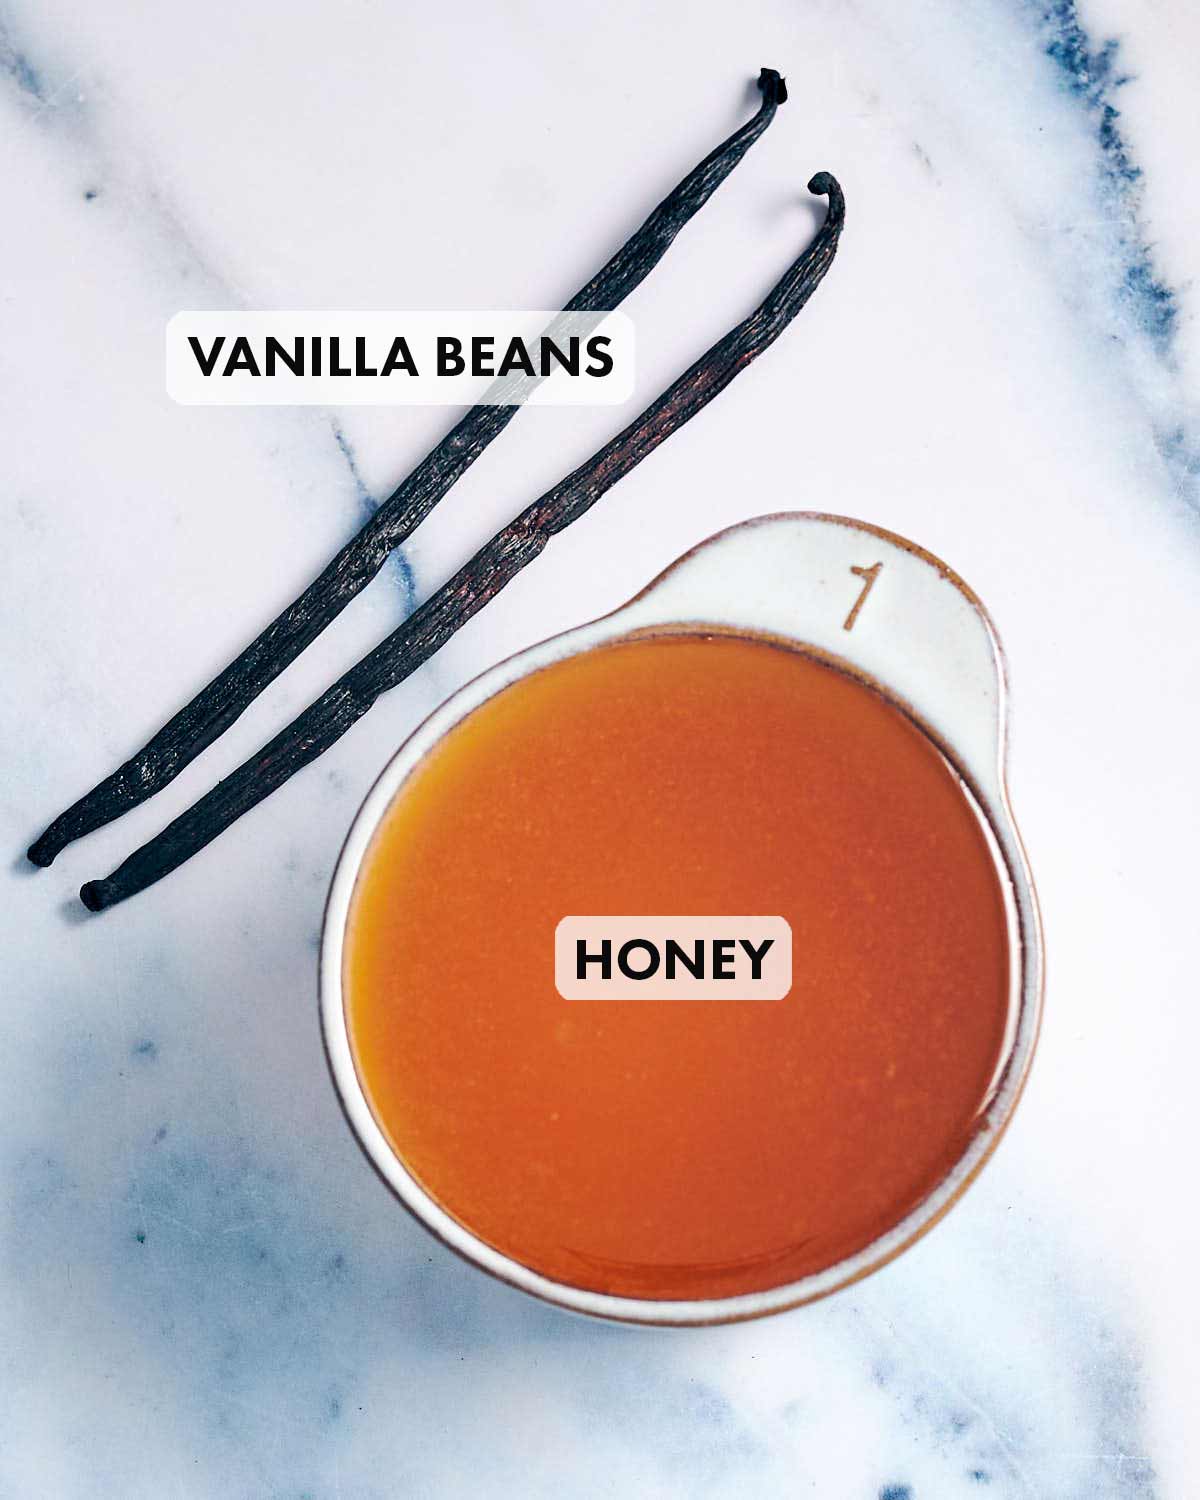 Ingredients to make infused vanilla honey (vanilla beans and honey).